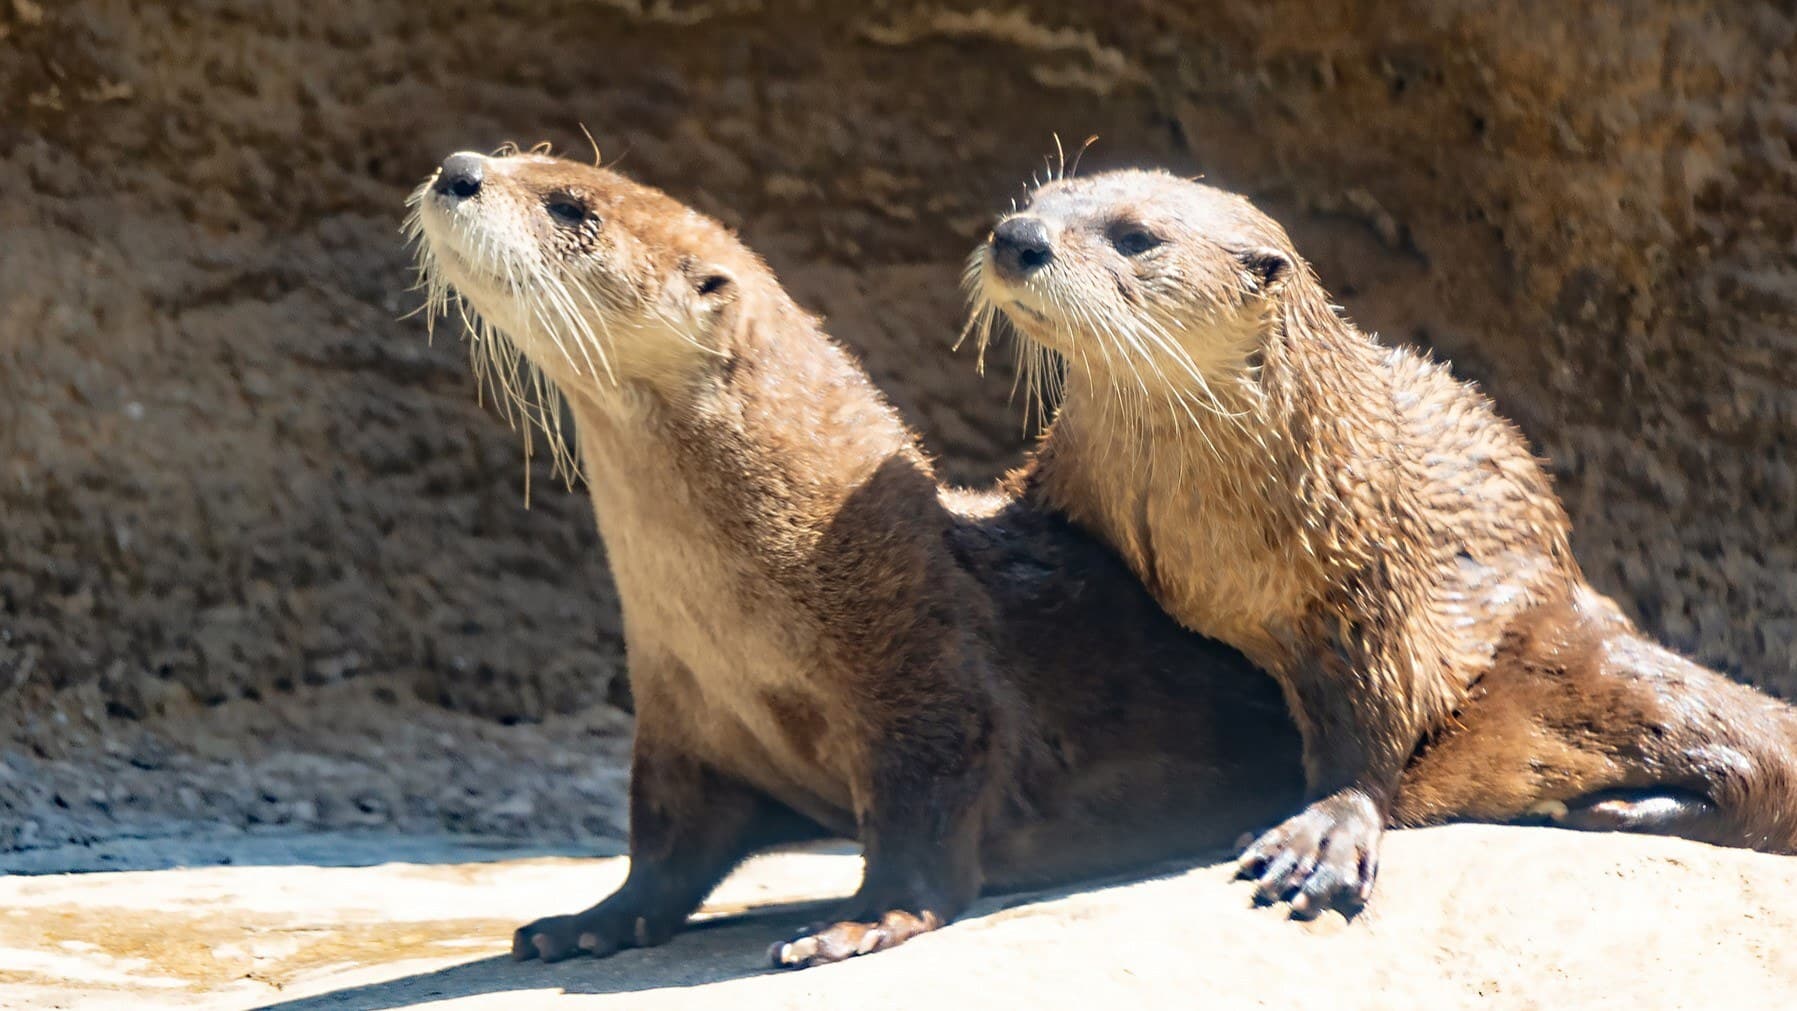 Pair of otters in exhibit